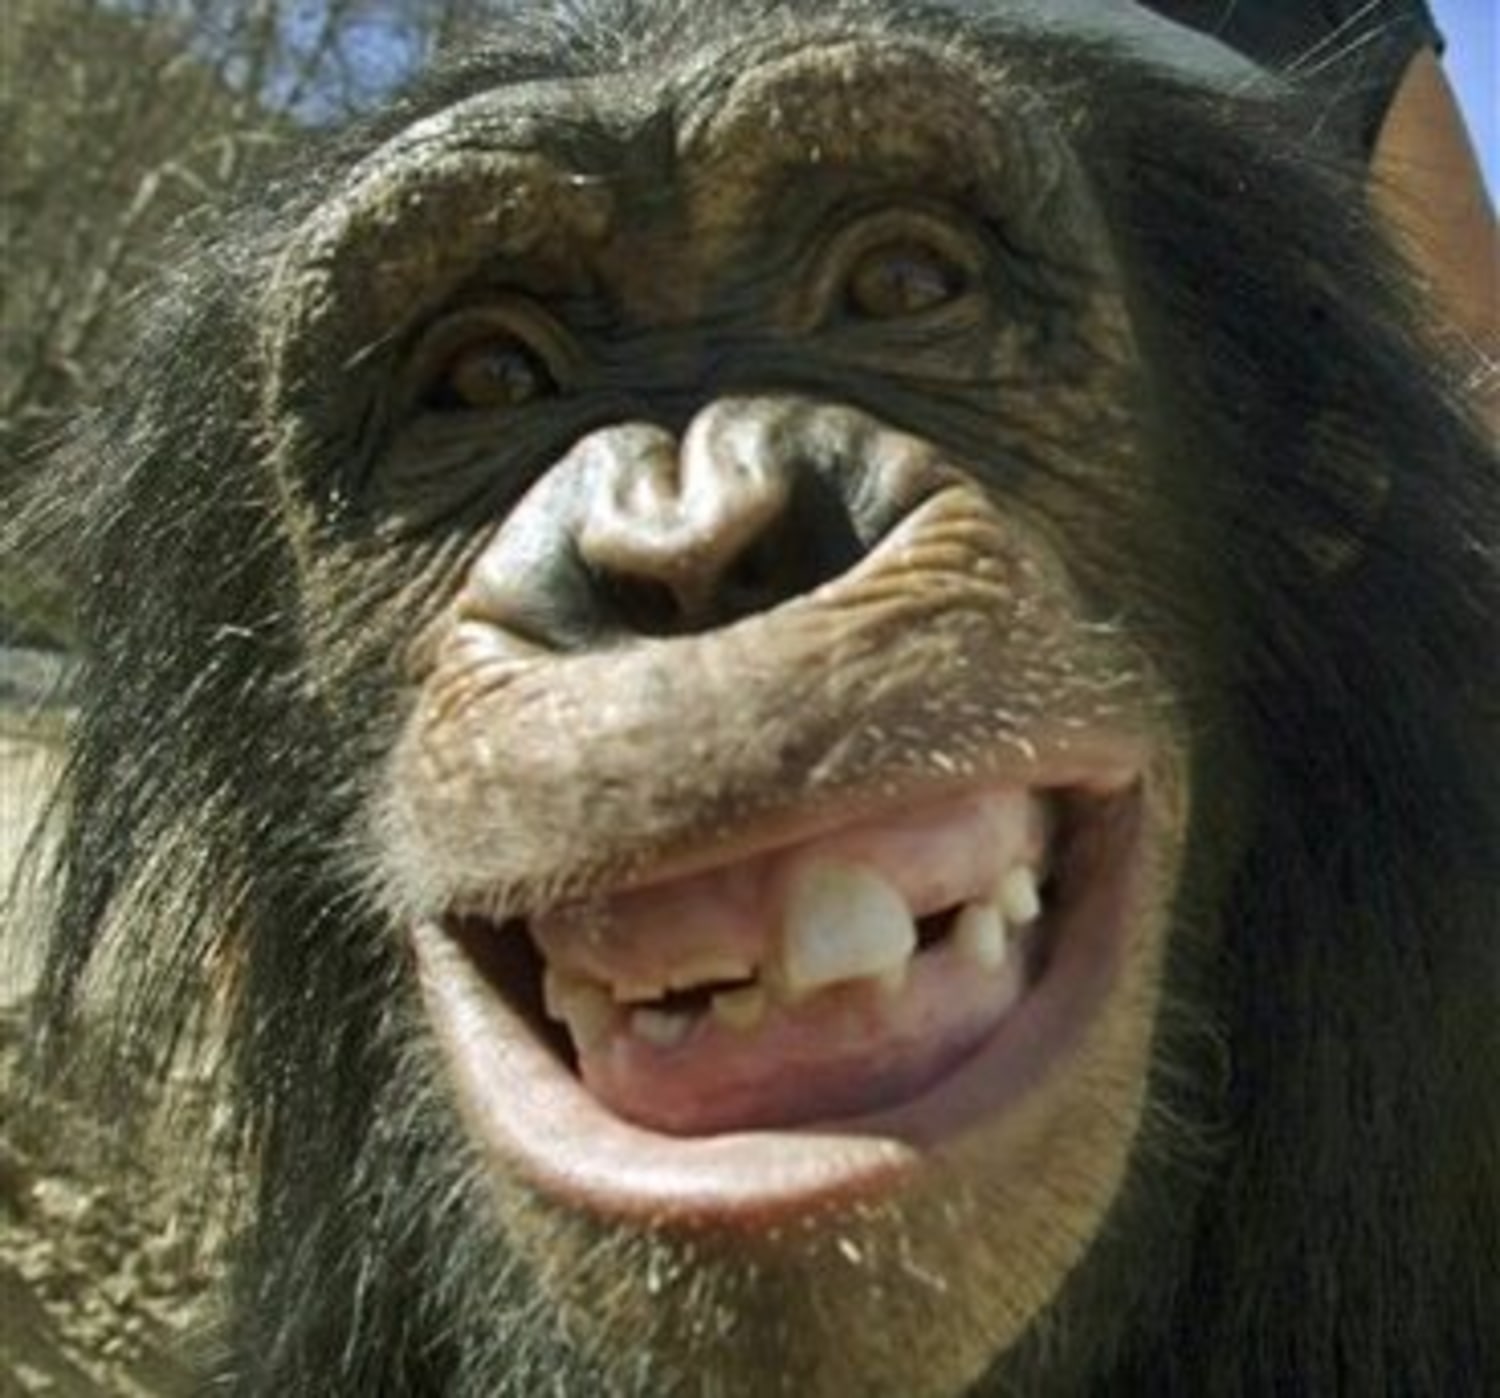 So two apes walk into a bar... Primates enjoy humor, too